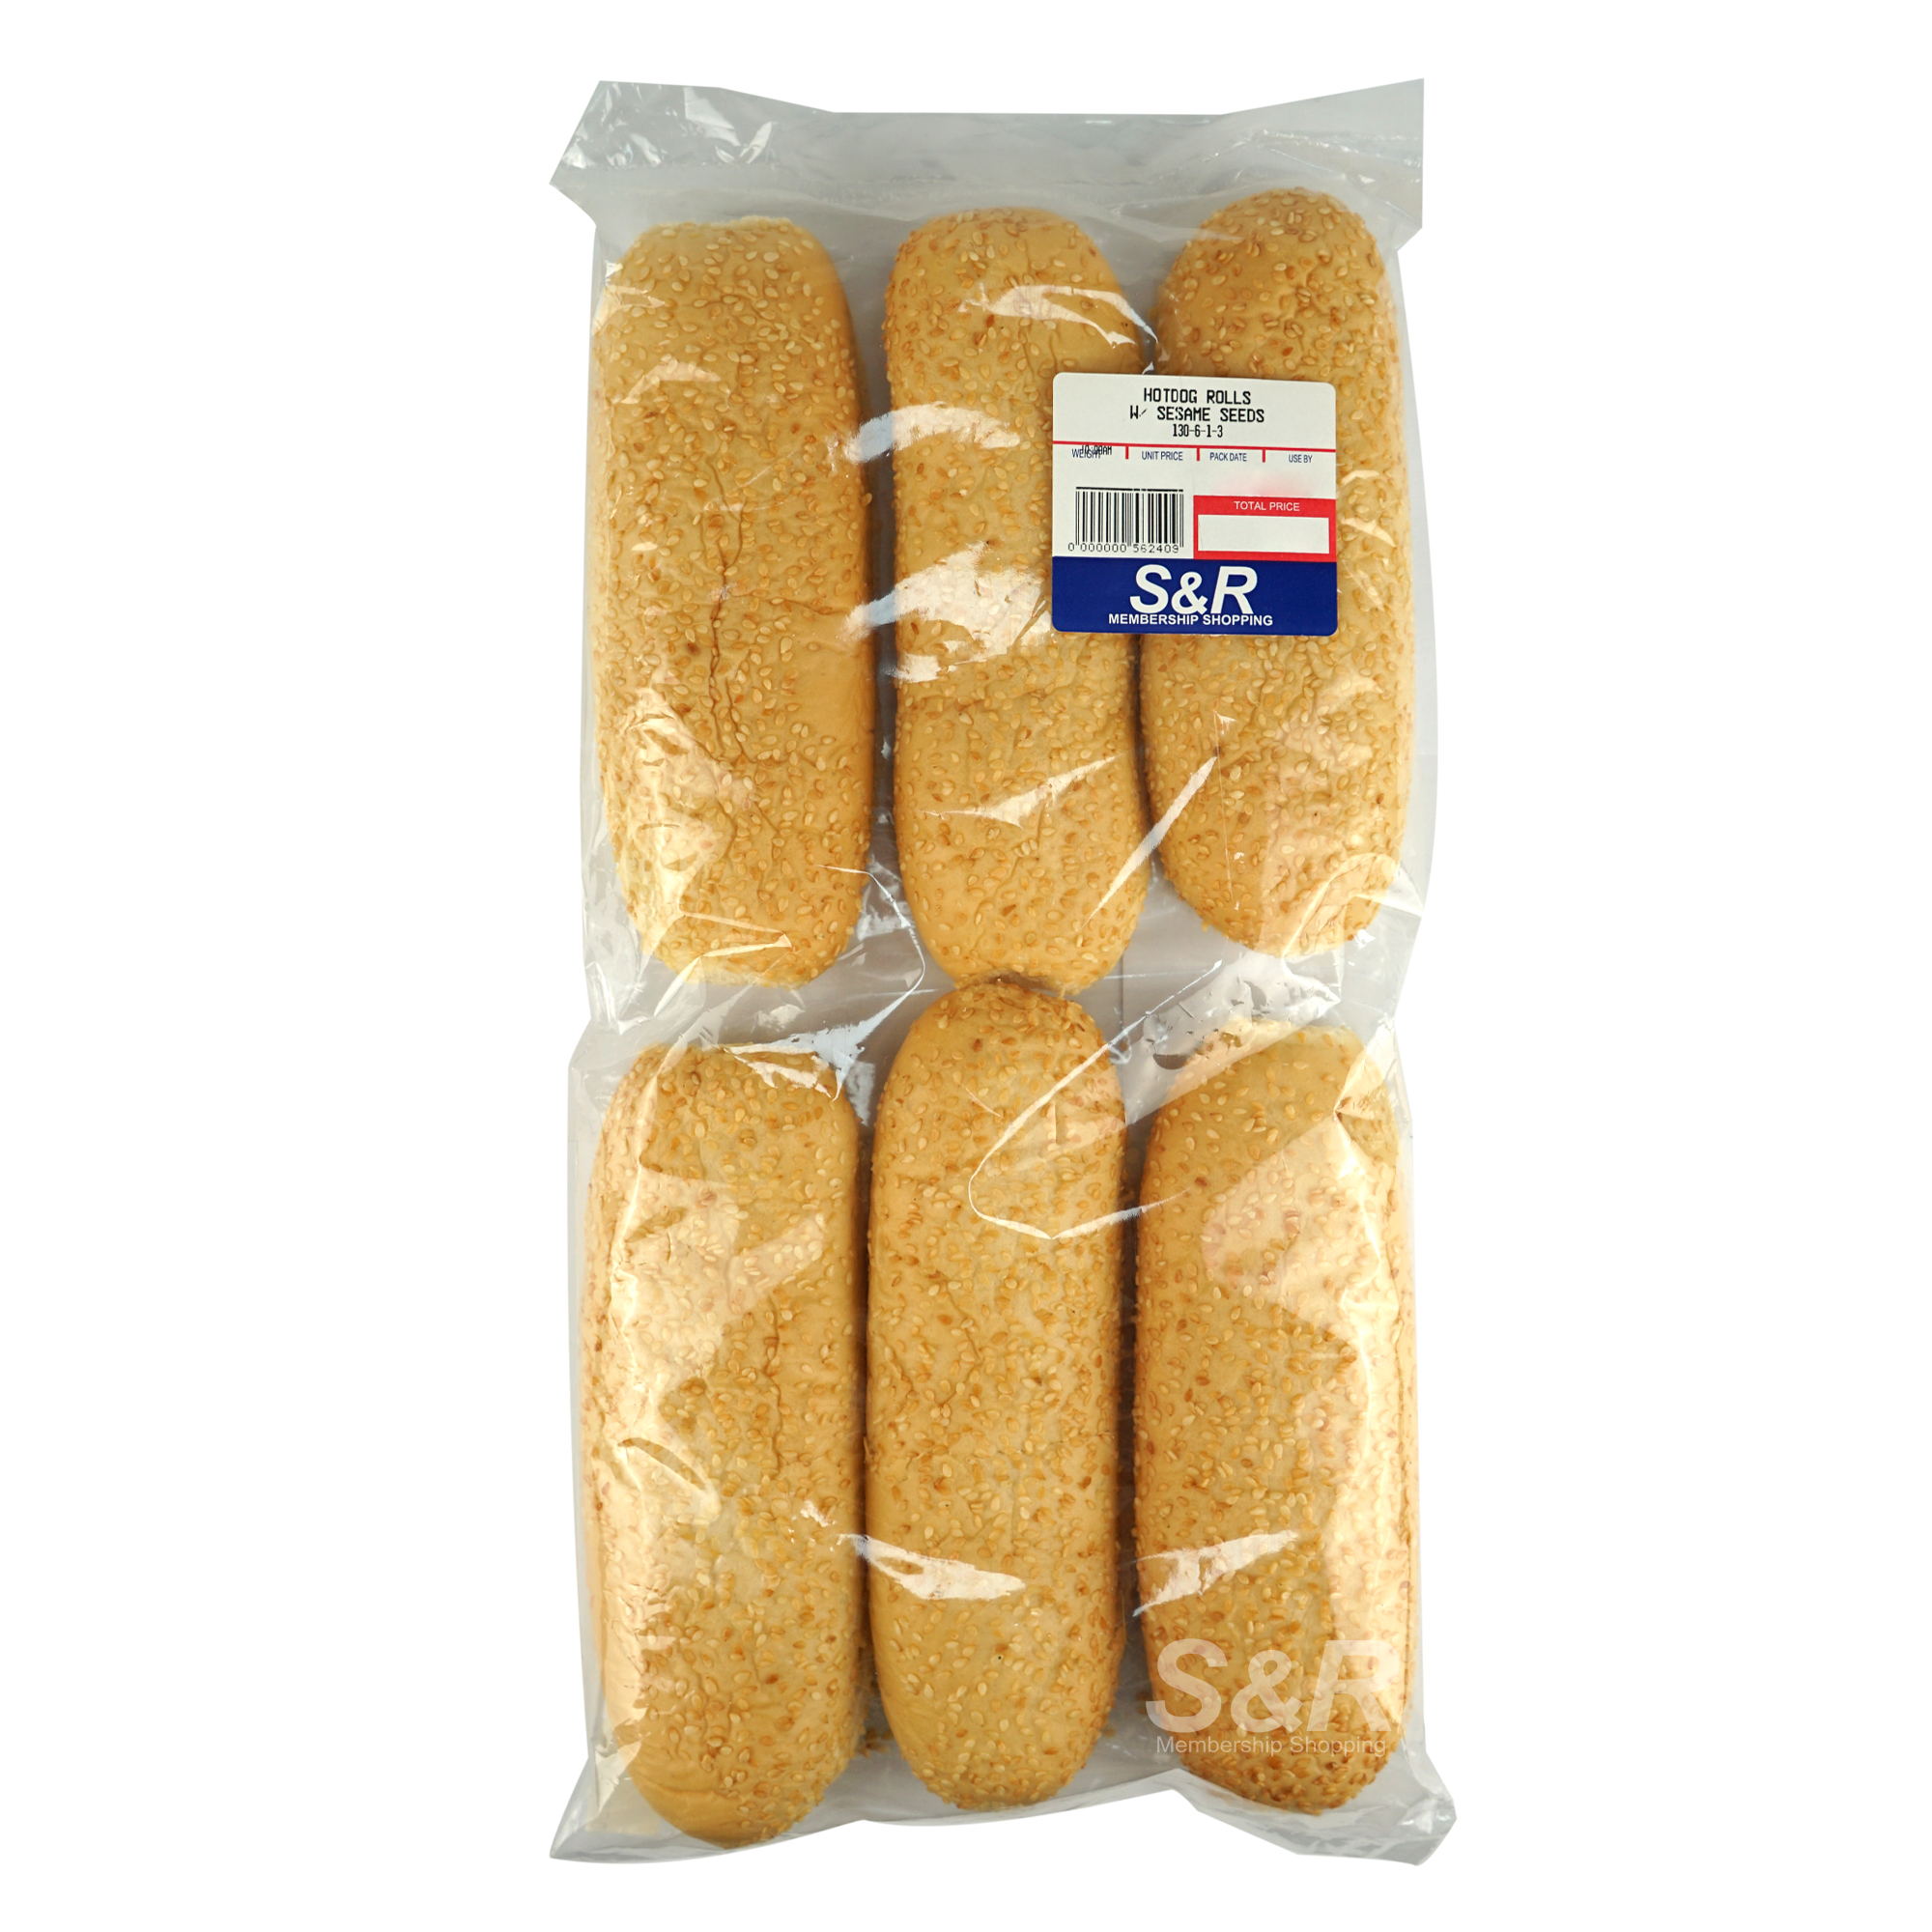 S&R Baker's Bread Hotdog Rolls with Sesame Seeds 6pcs